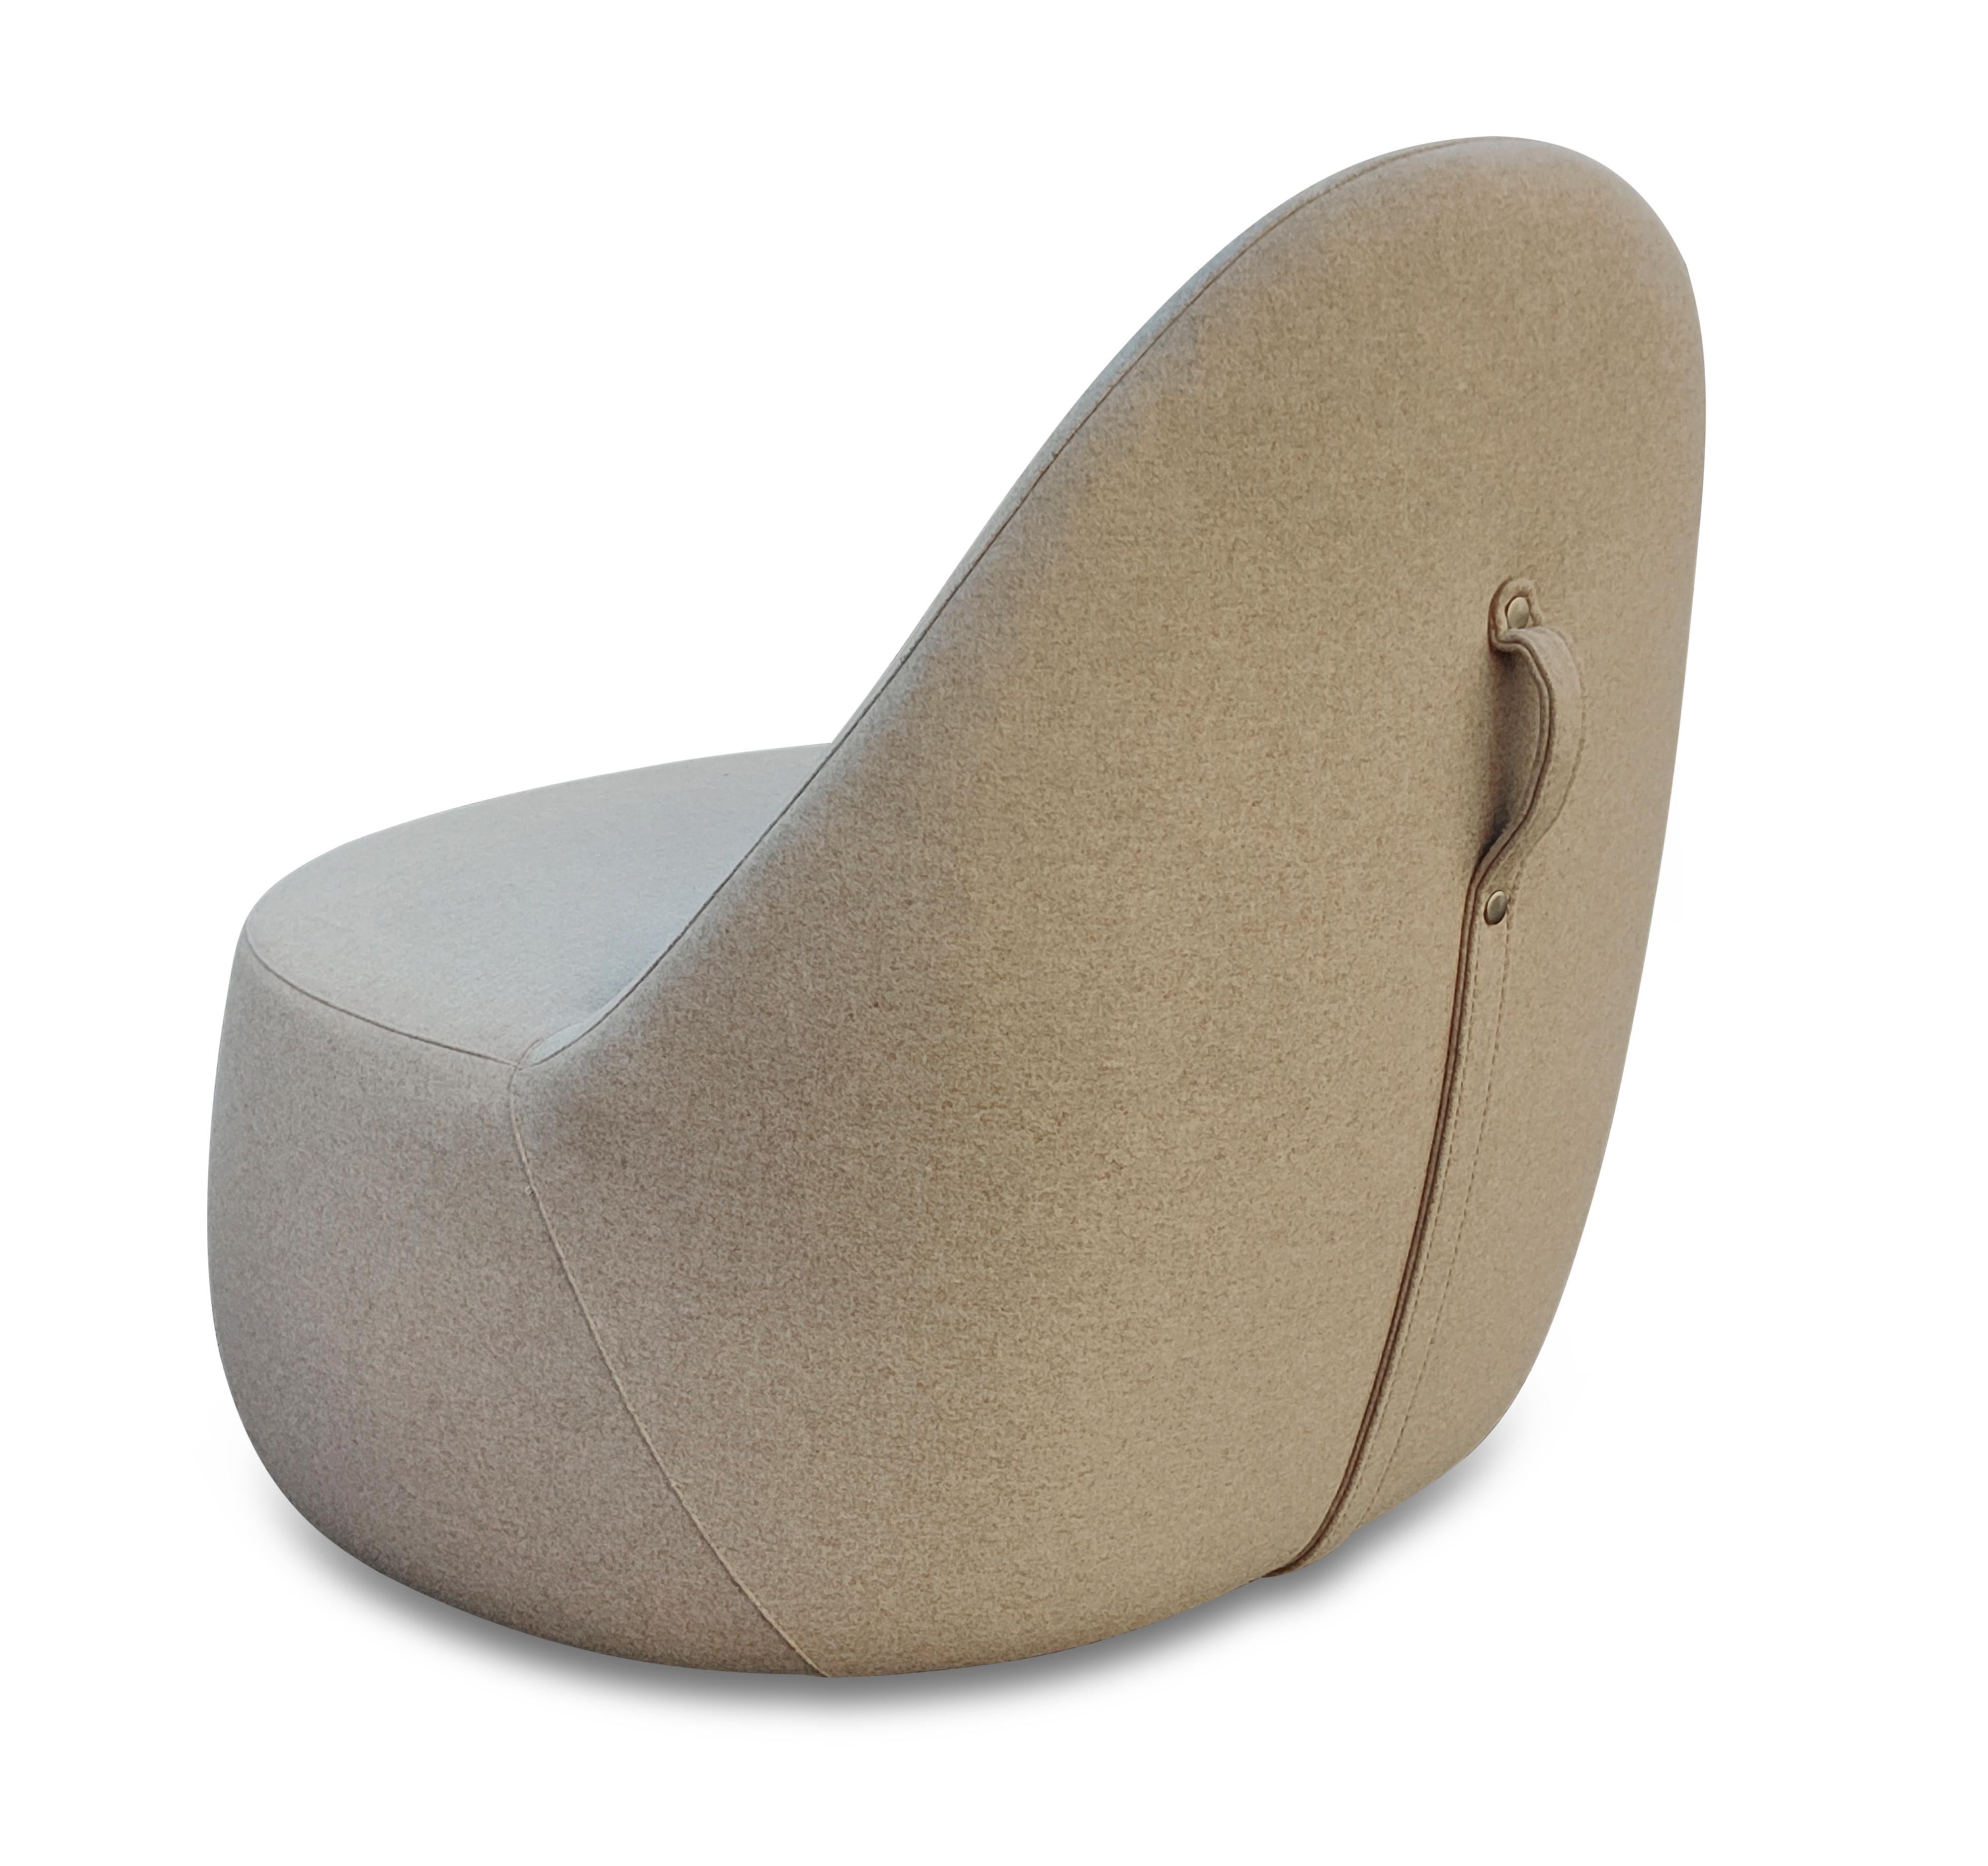 Mitt Lounge Chairs Pair, Claudia + Harry Washington, Bernhardt Design Space-Age 1